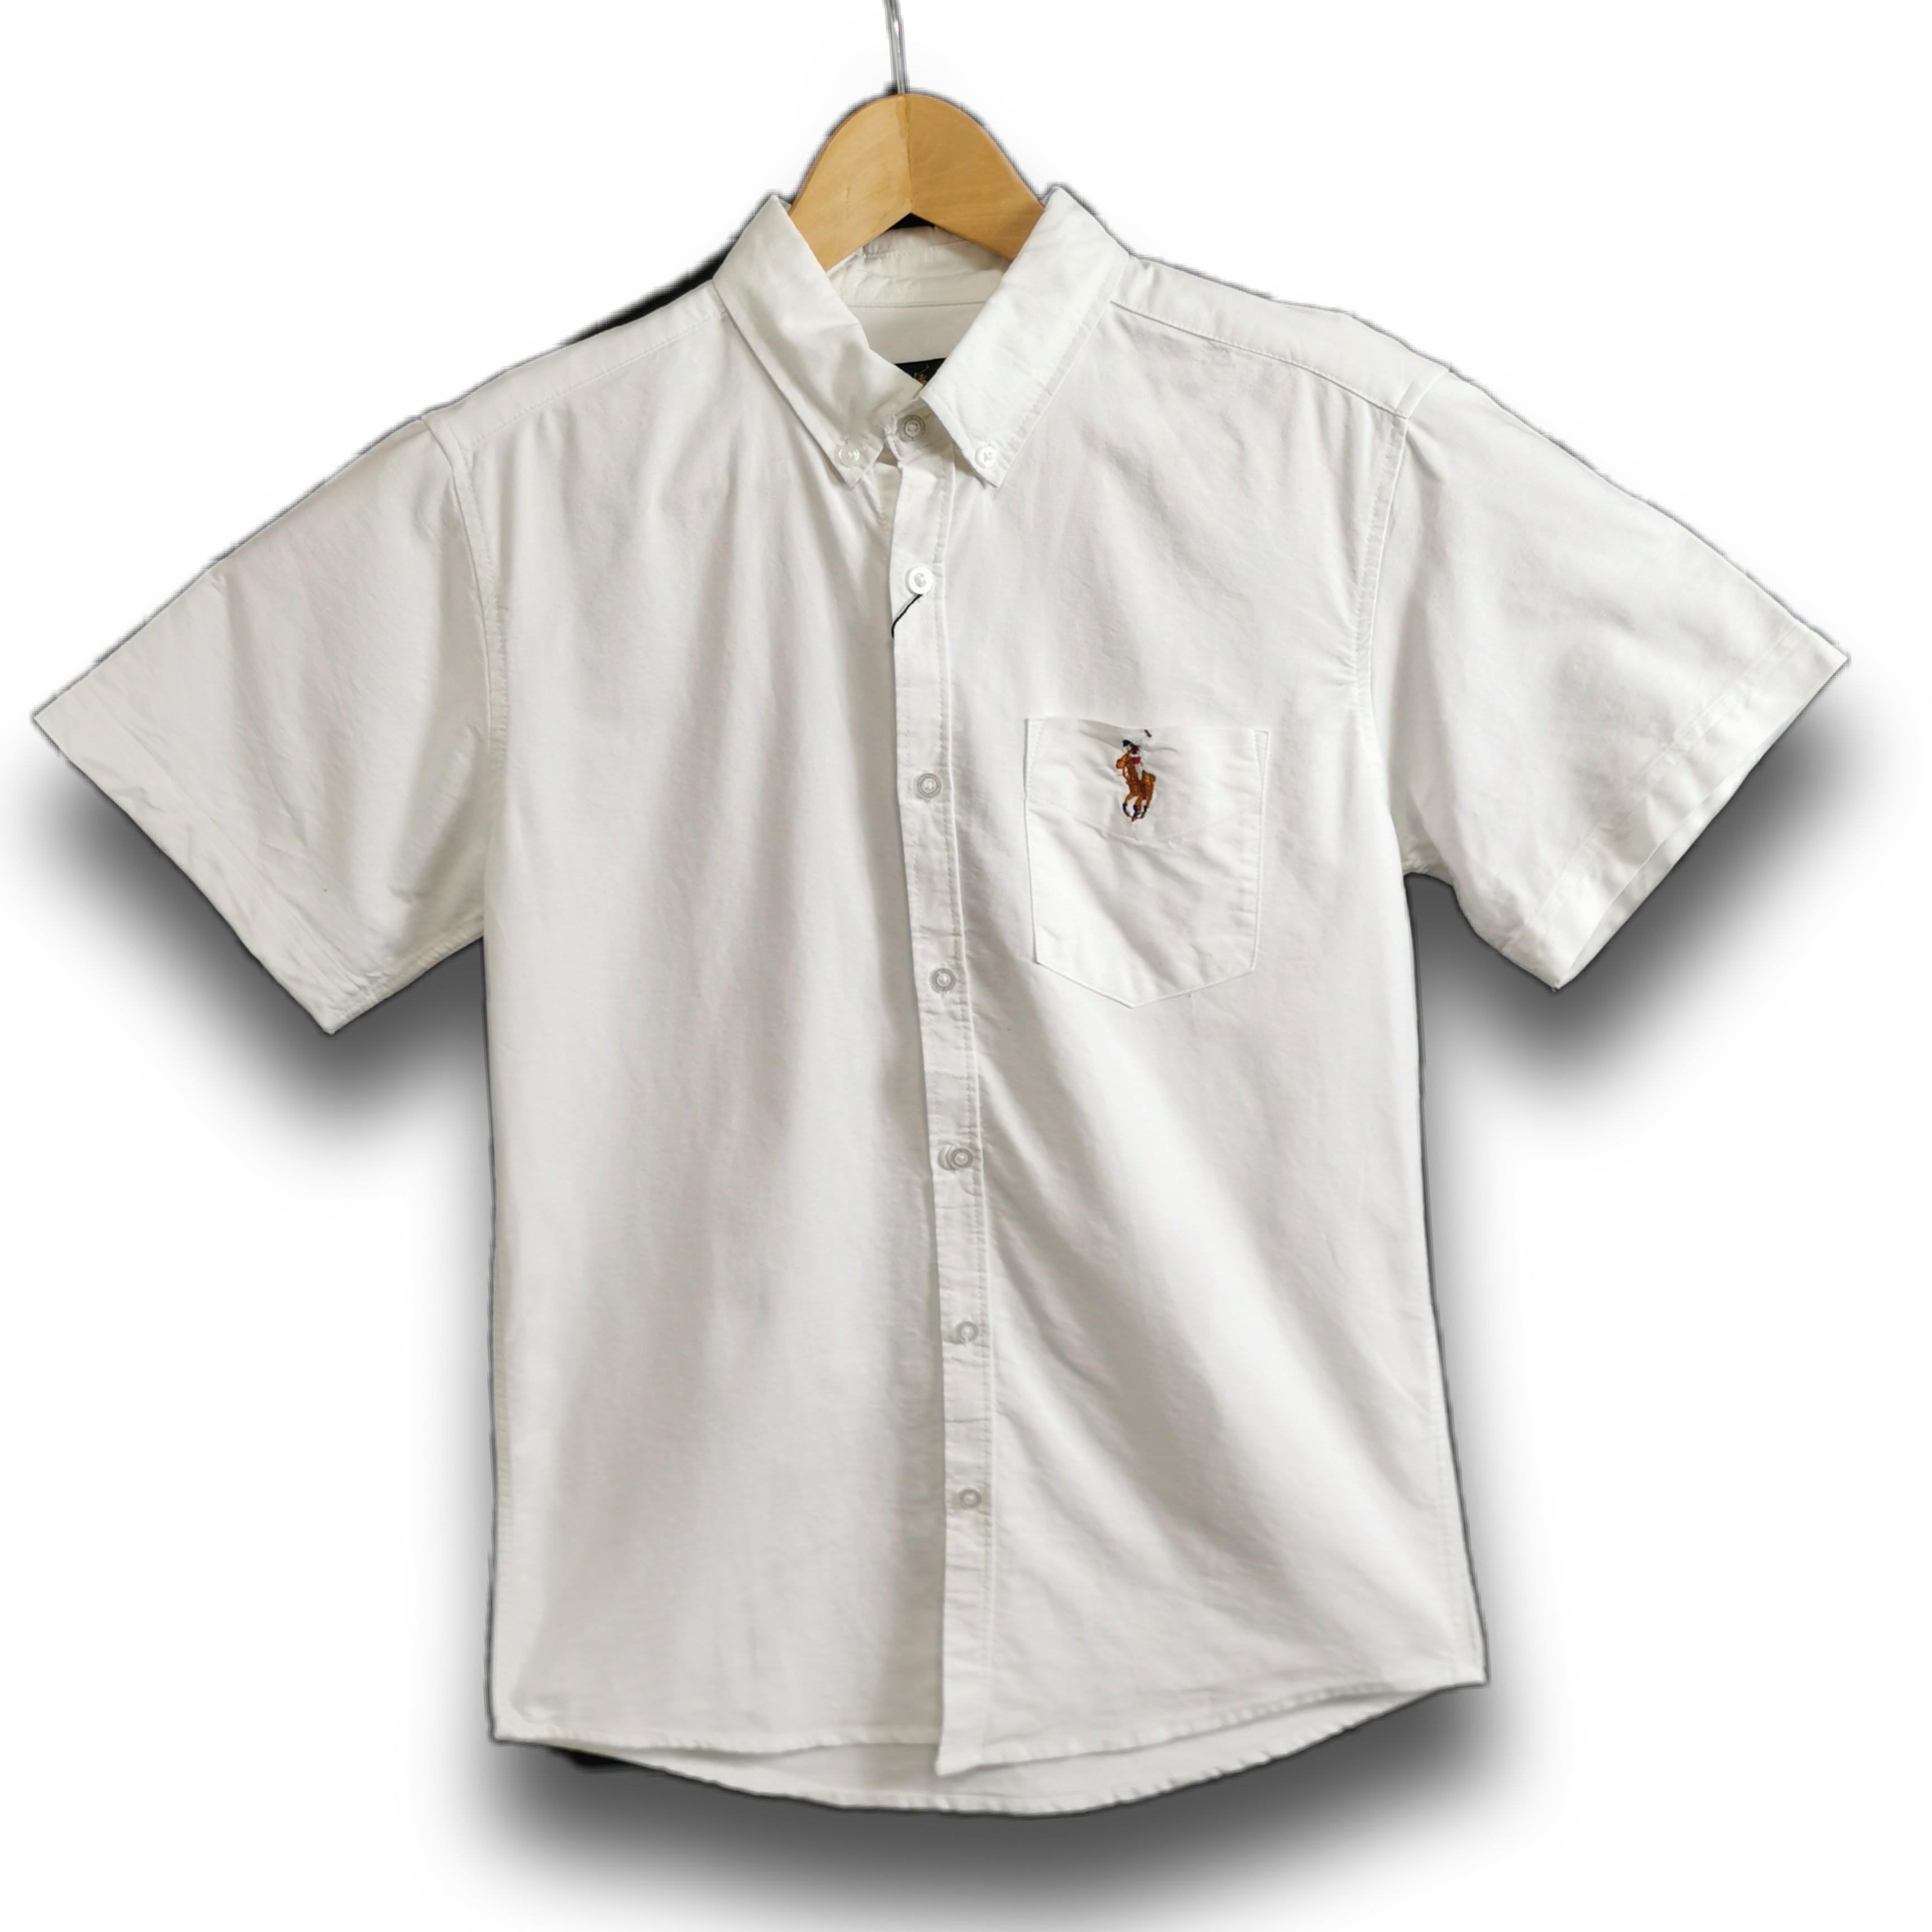 Polo Ralph Lauren Plain white Short Sleeve Shirt Size S-3XL 